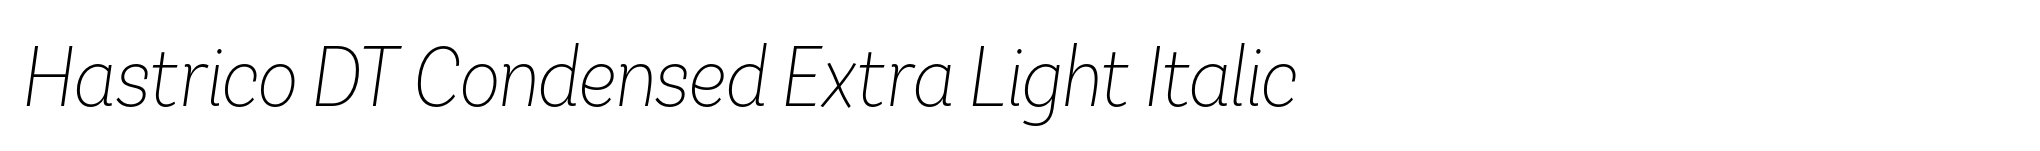 Hastrico DT Condensed Extra Light Italic image